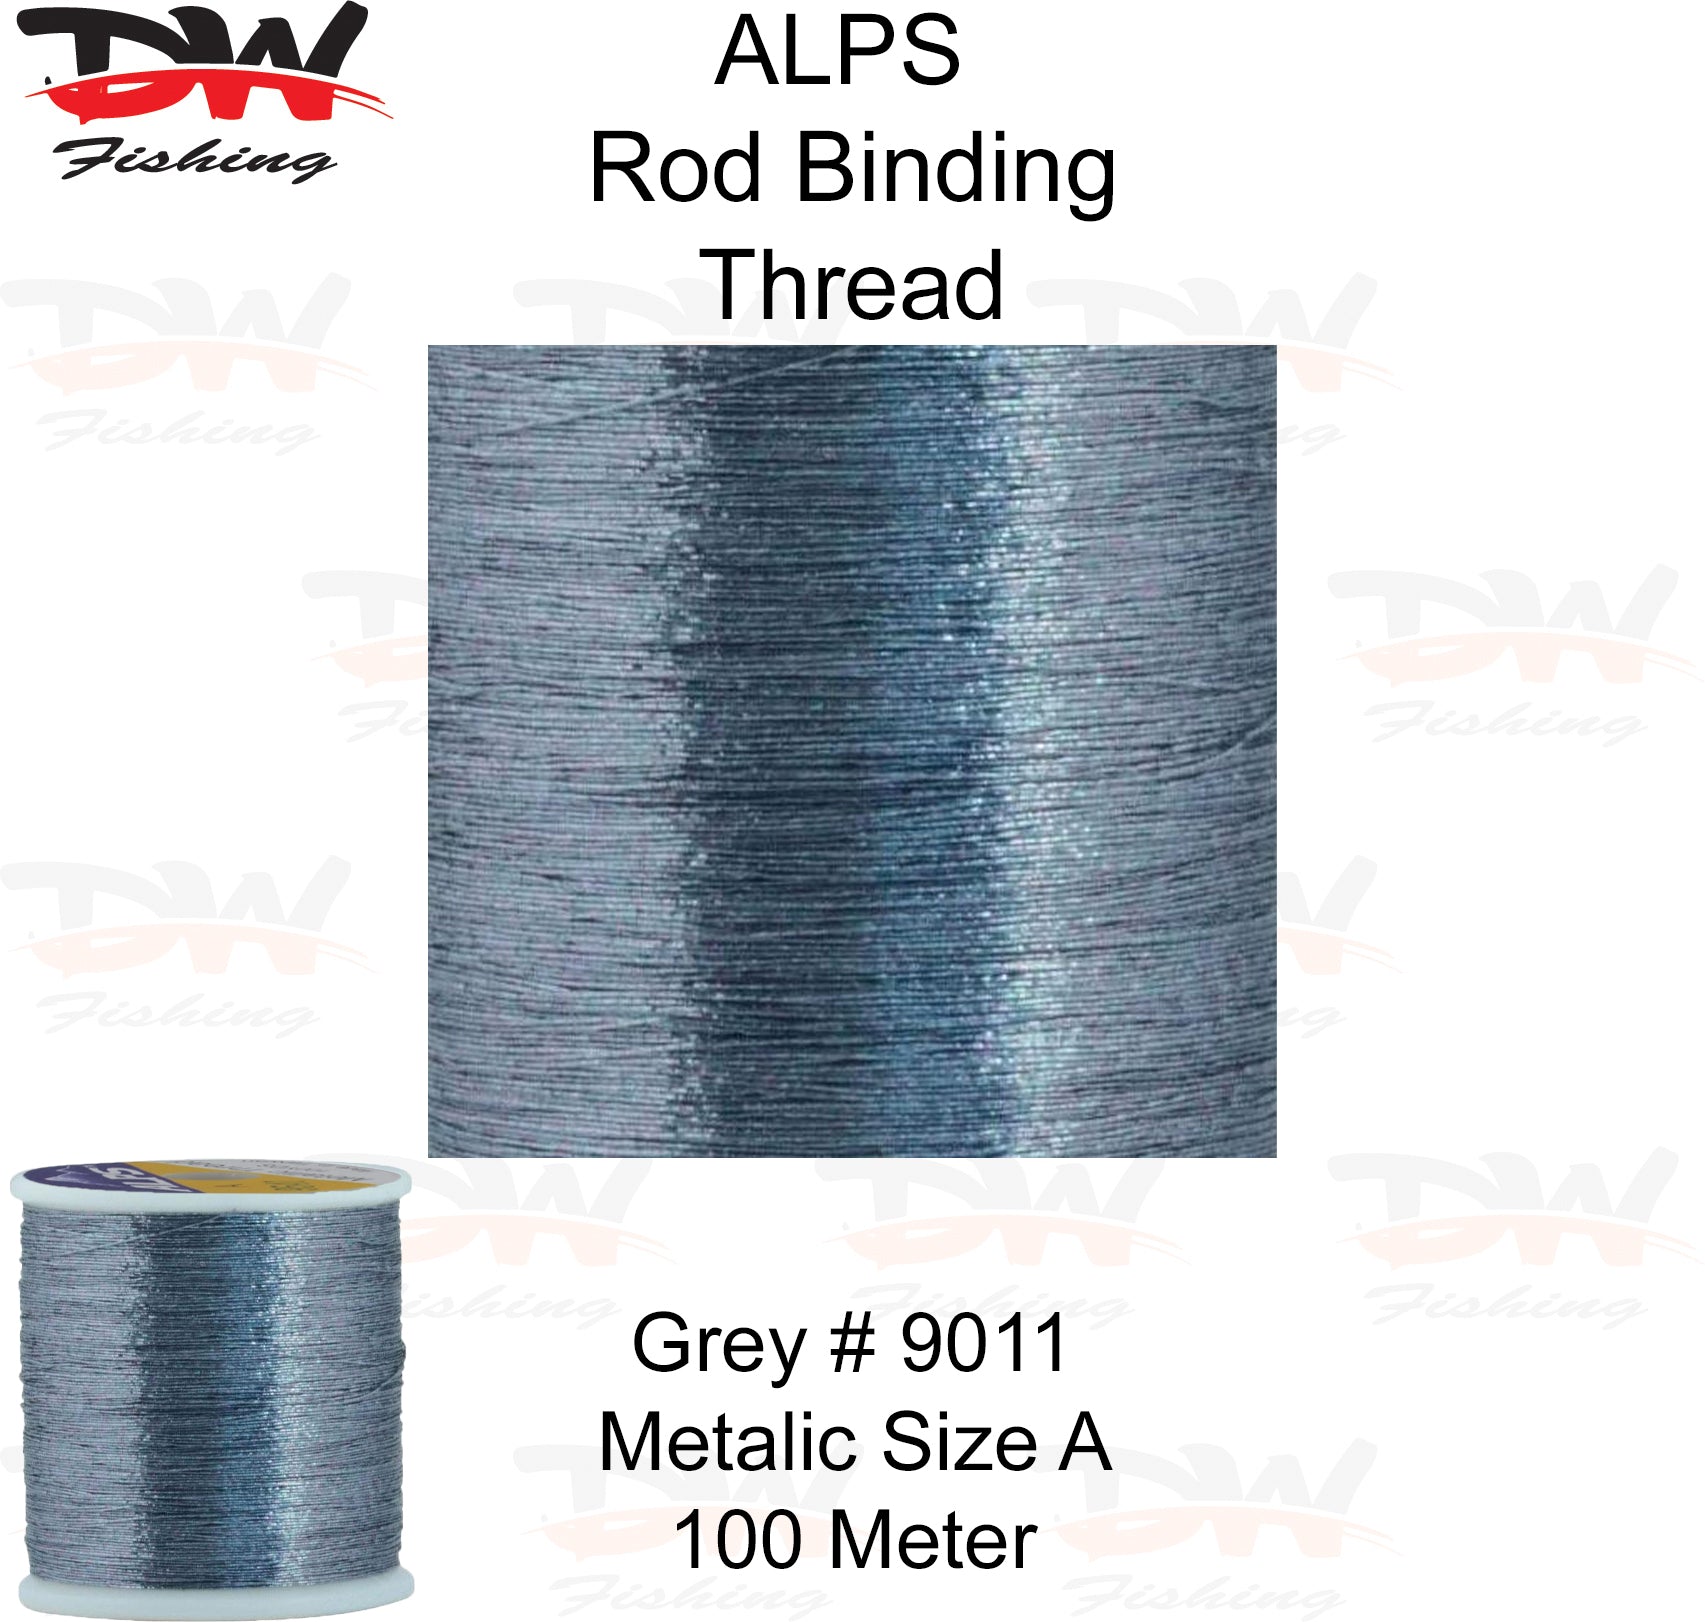 ALPS metalic rod binding thread Grey